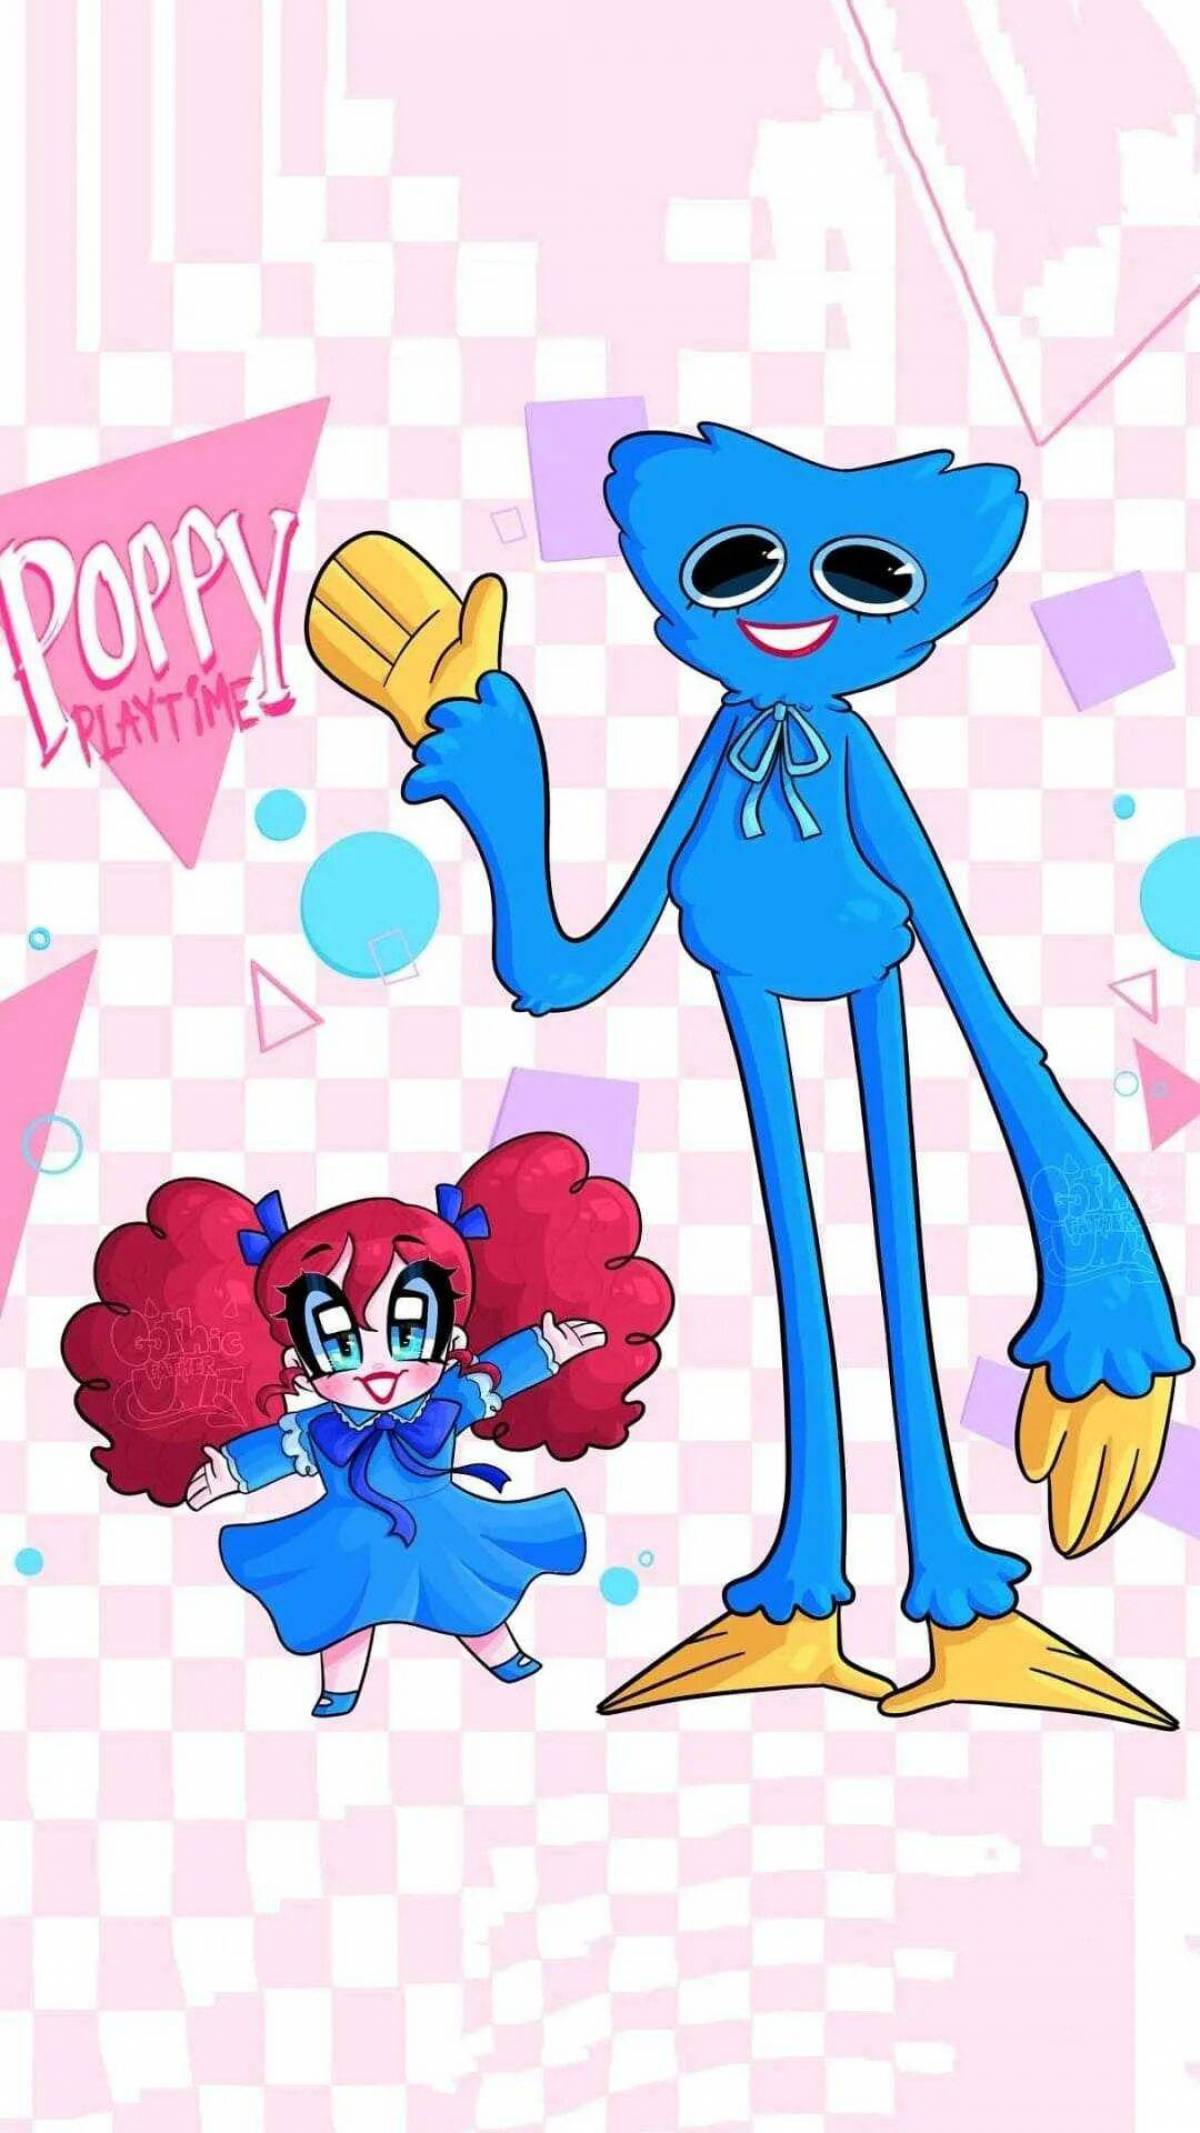 Poppy playtime 3 милые картинки. Поппи Плэйтайм. Poppy Playtime Поппи. Кукла Поппи из игры Poppy Playtime. Игрок из Поппи плей тайм.